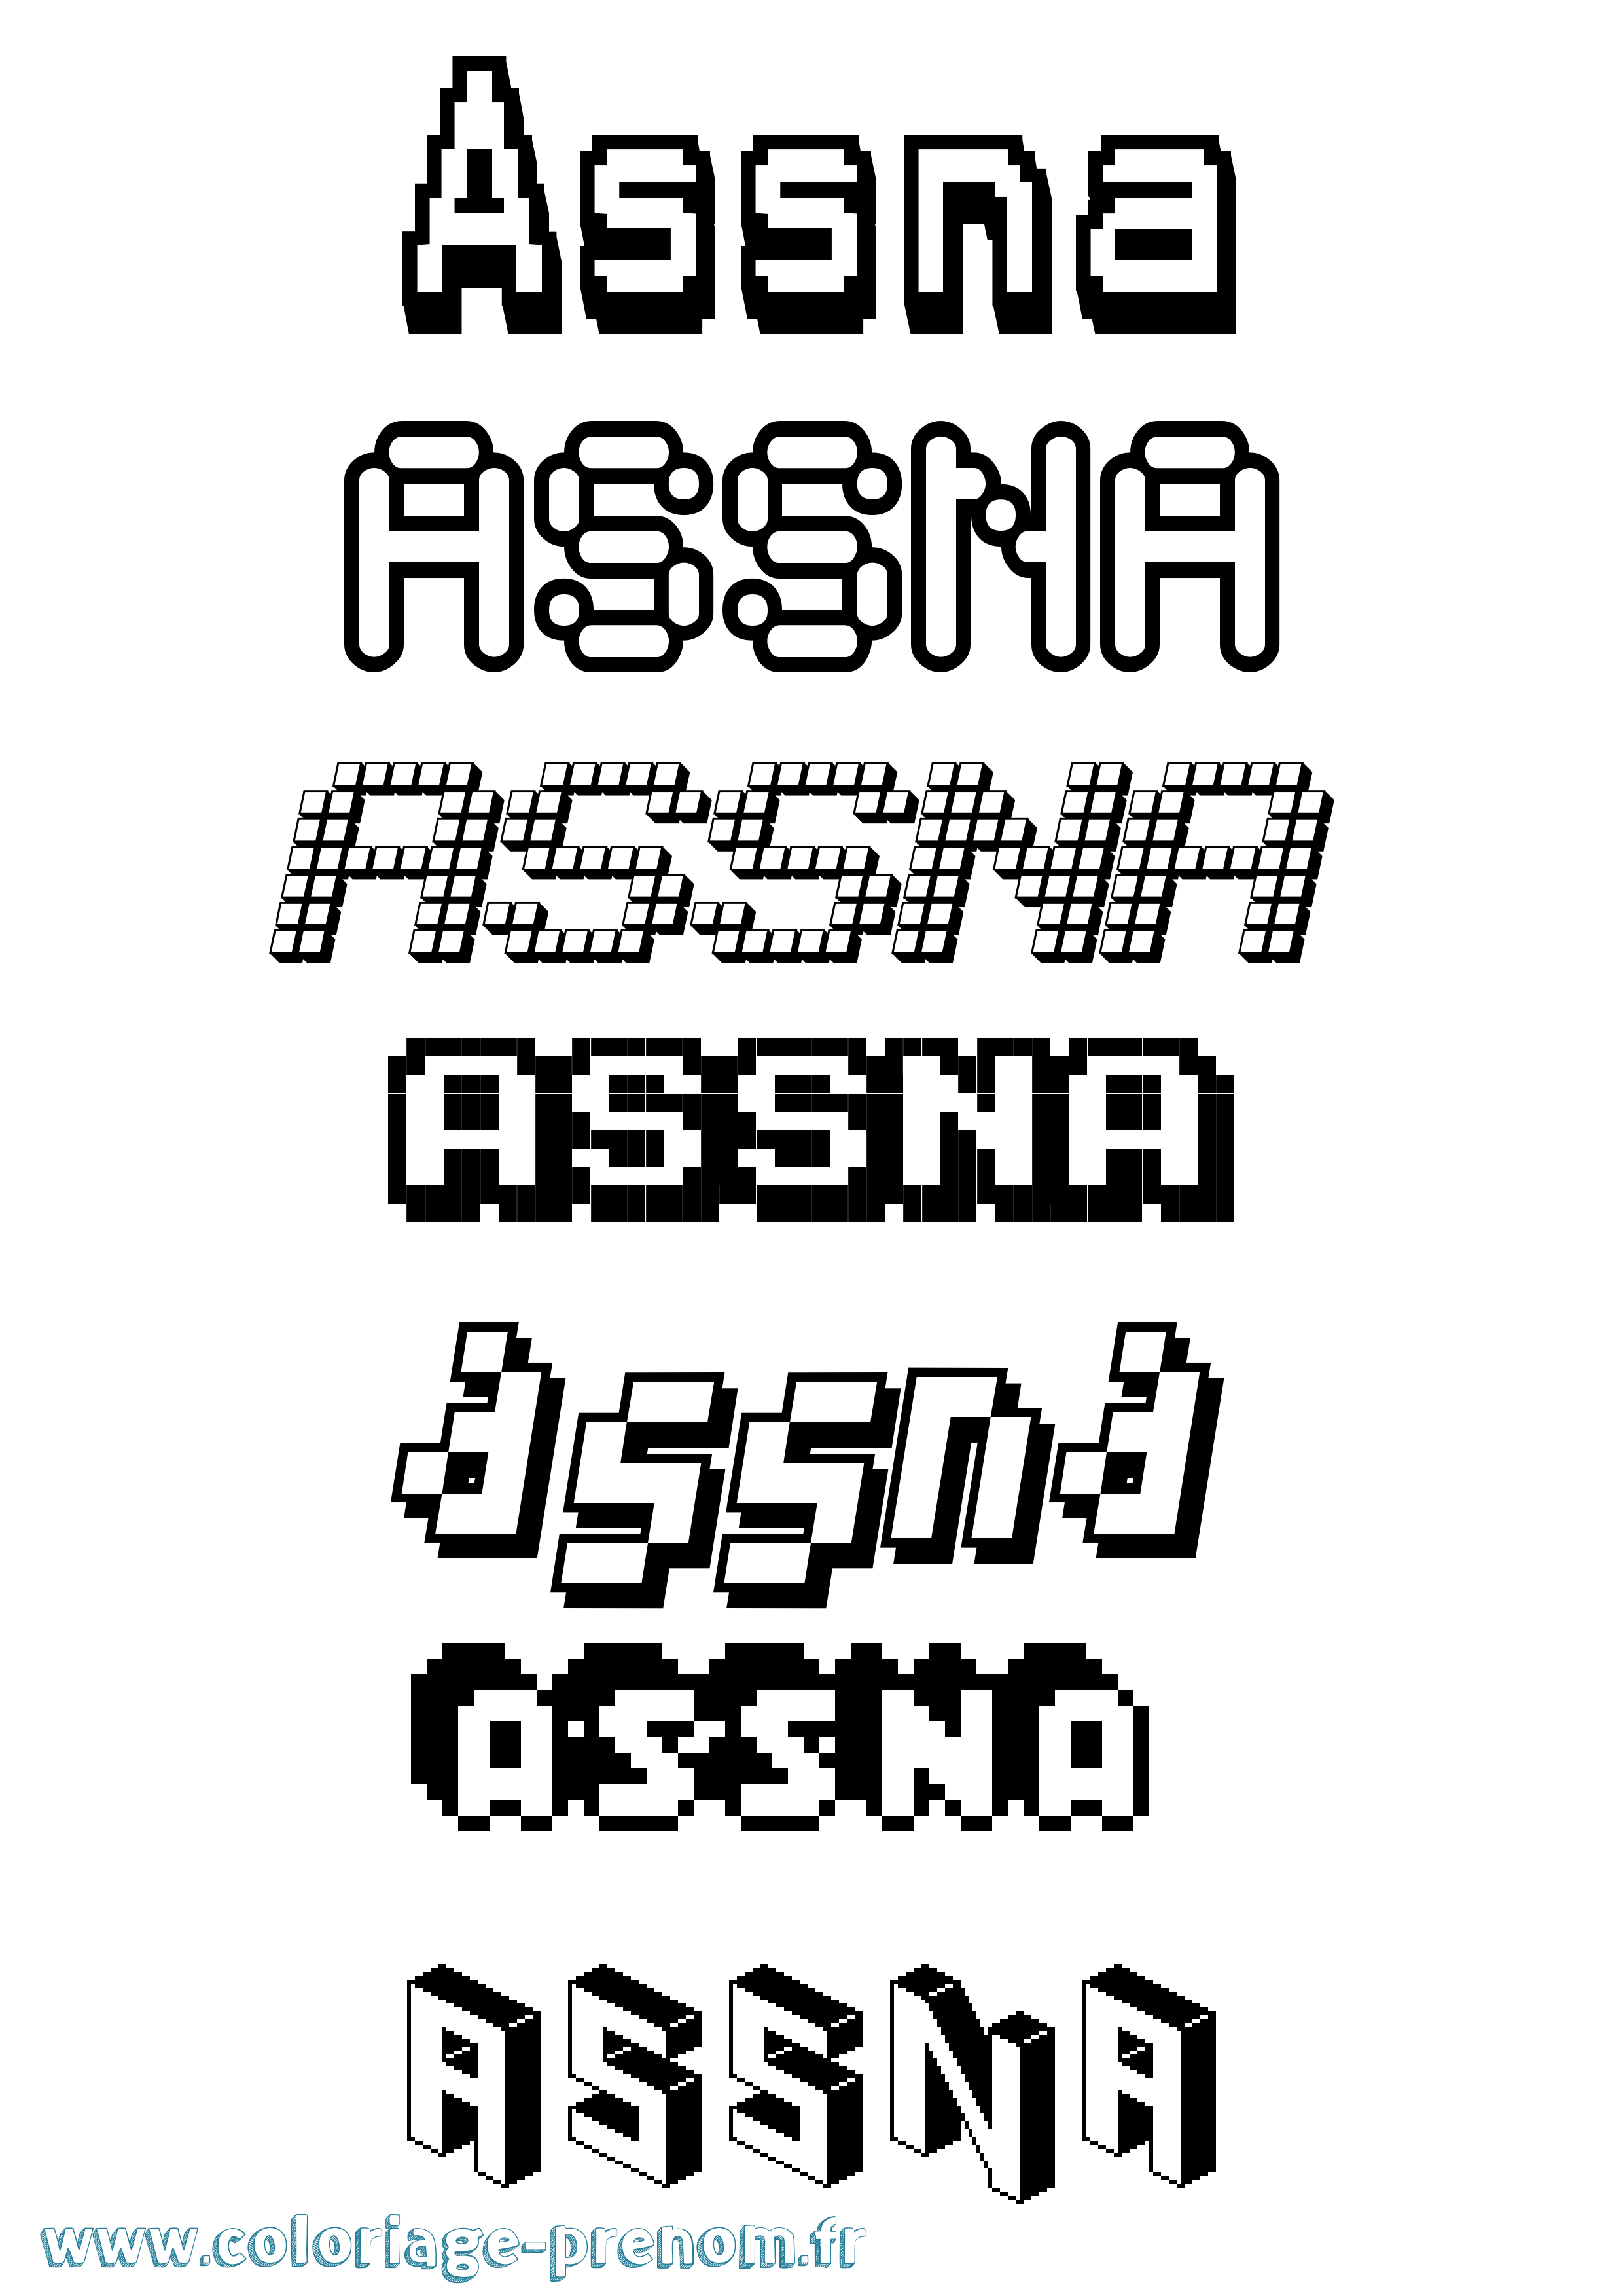 Coloriage prénom Assna Pixel